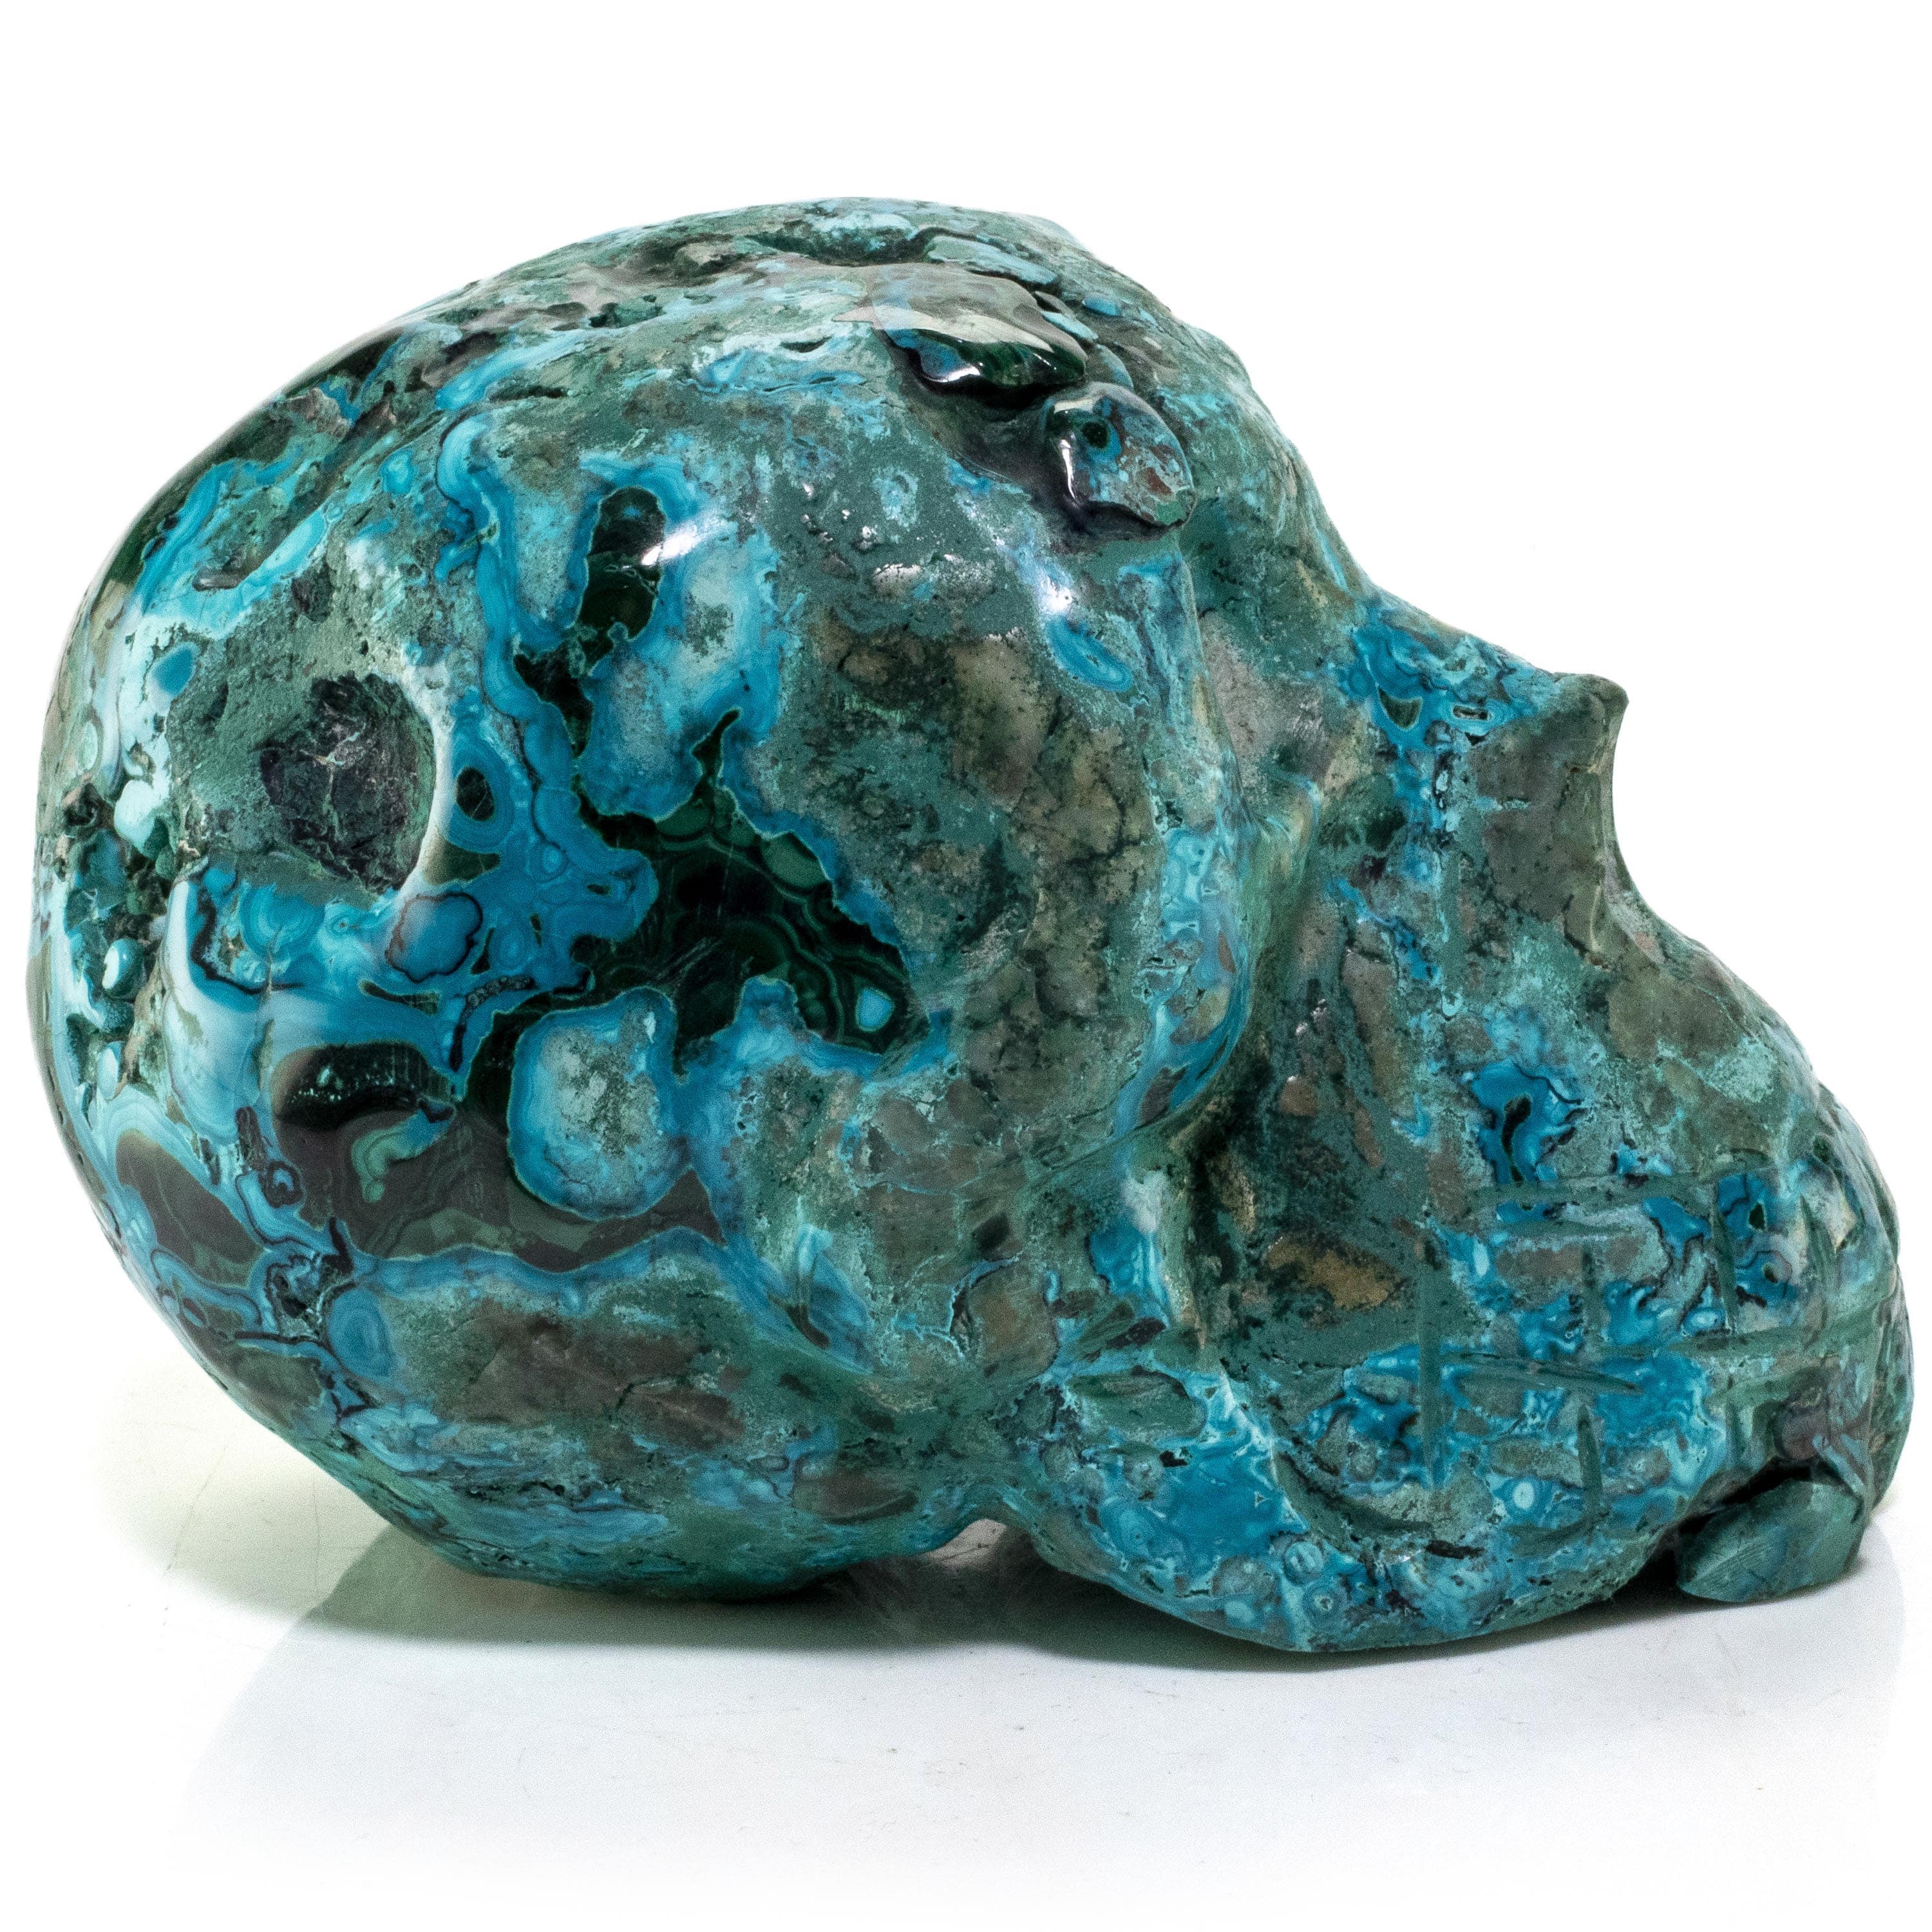 Kalifano Malachite Chrysocolla Skull Carving 5.5" / 1,171g SK4400-CRY.002